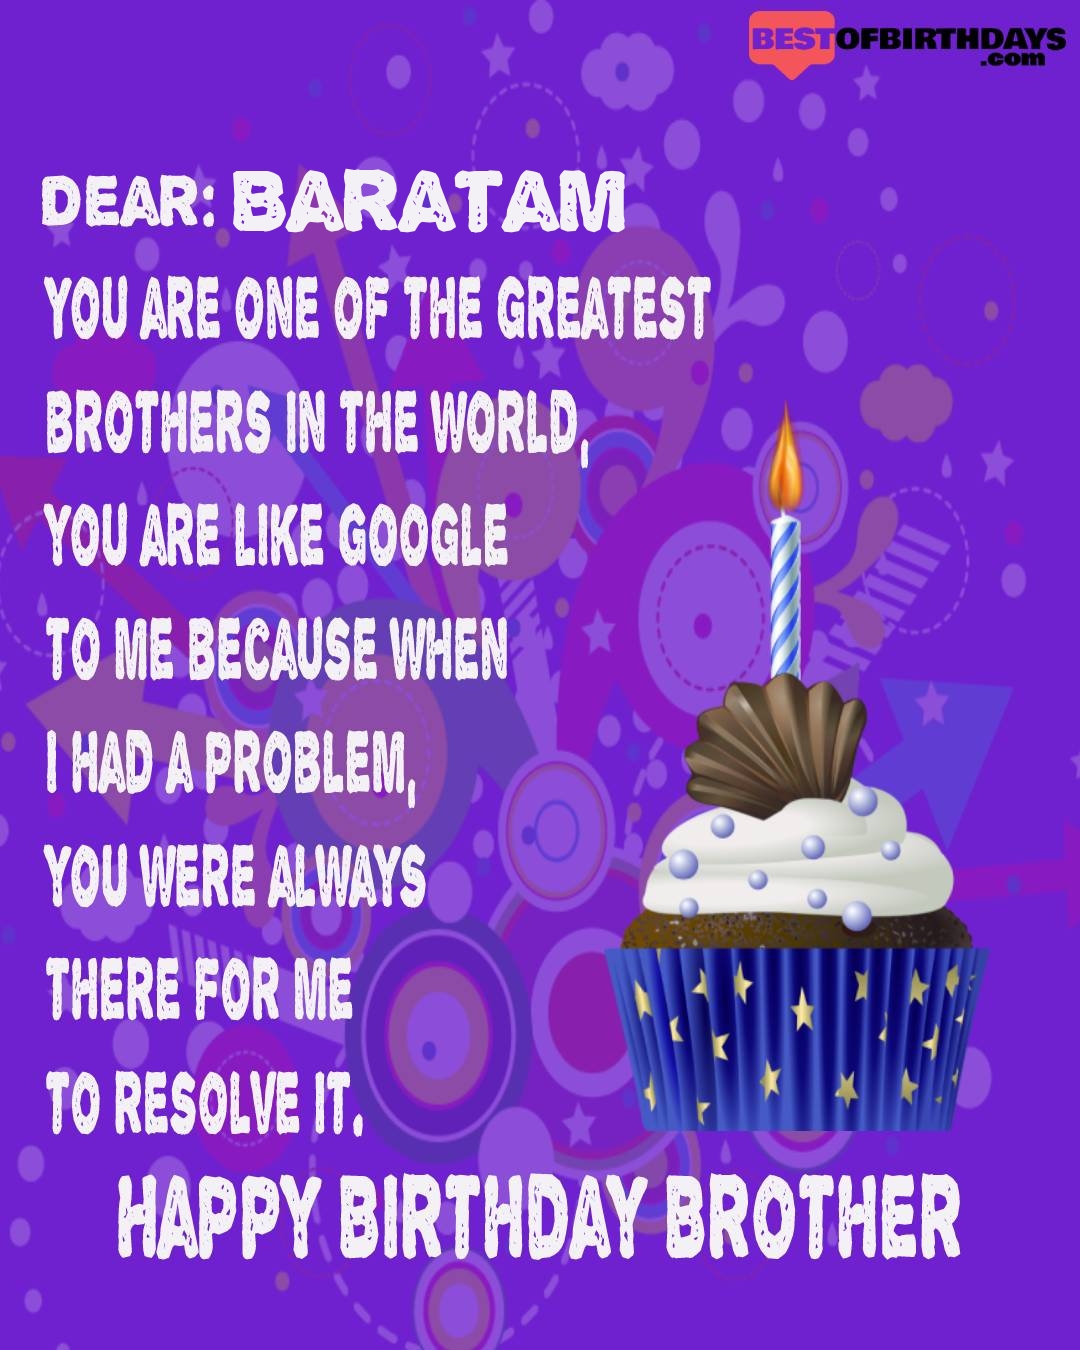 Happy birthday baratam bhai brother bro